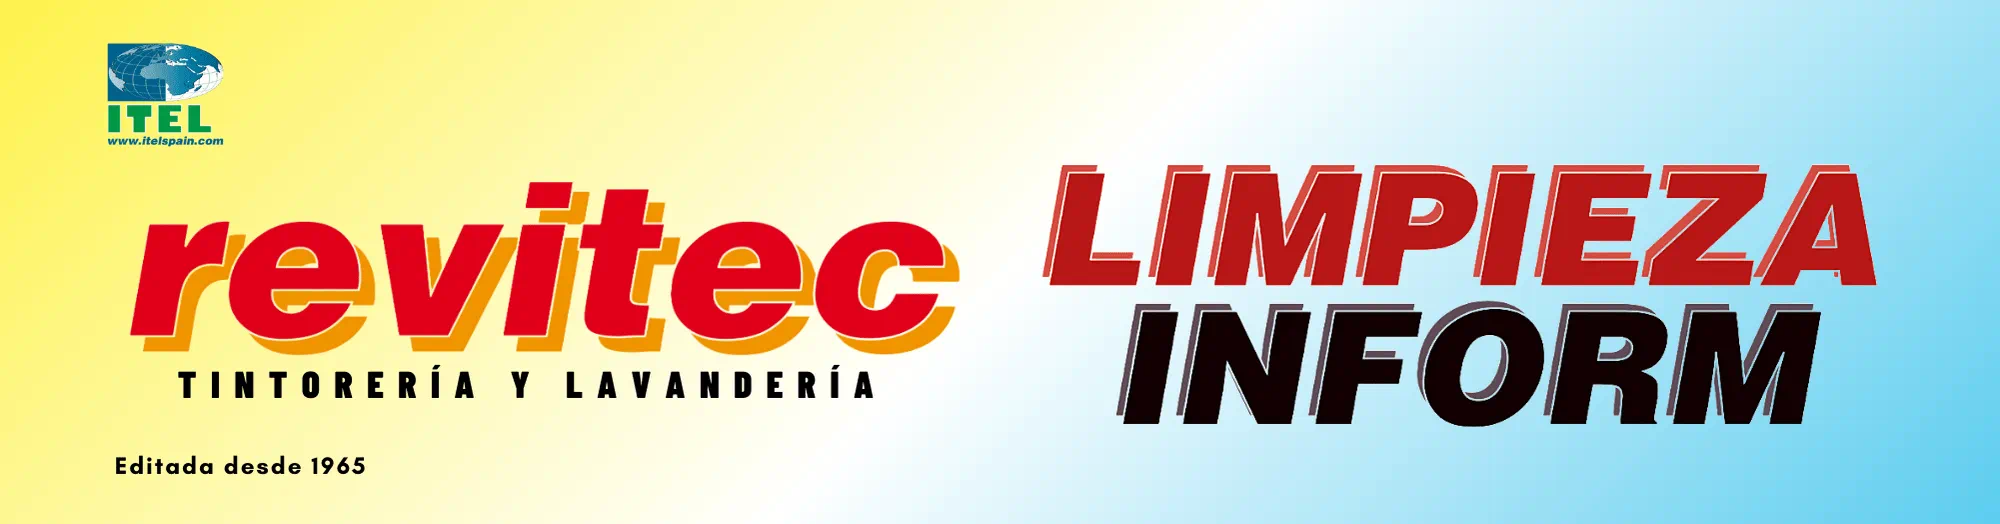 Revitec-Limpieza Inform logo